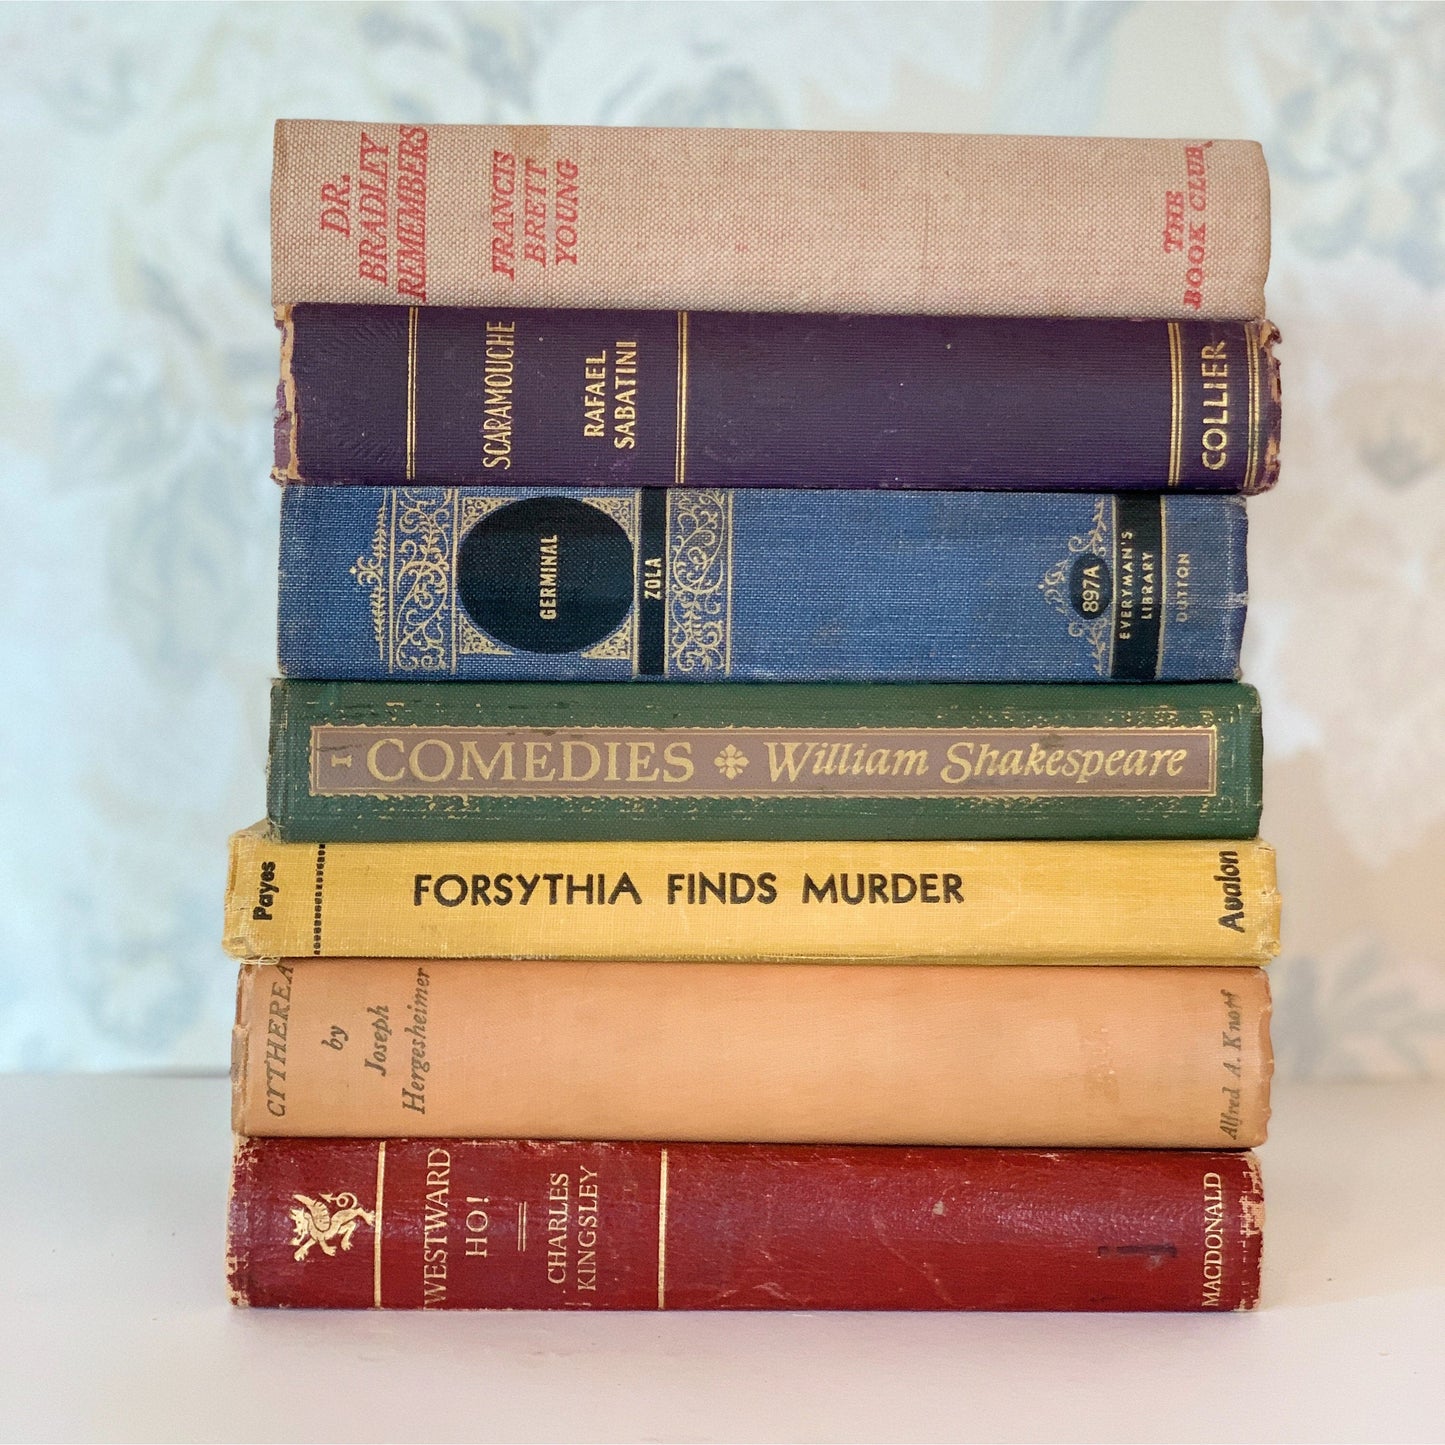 Faded Vintage Rainbow Book Set for Shelf Display, Rustic Farmhouse Decor, Rainbow Bookshelf Decor